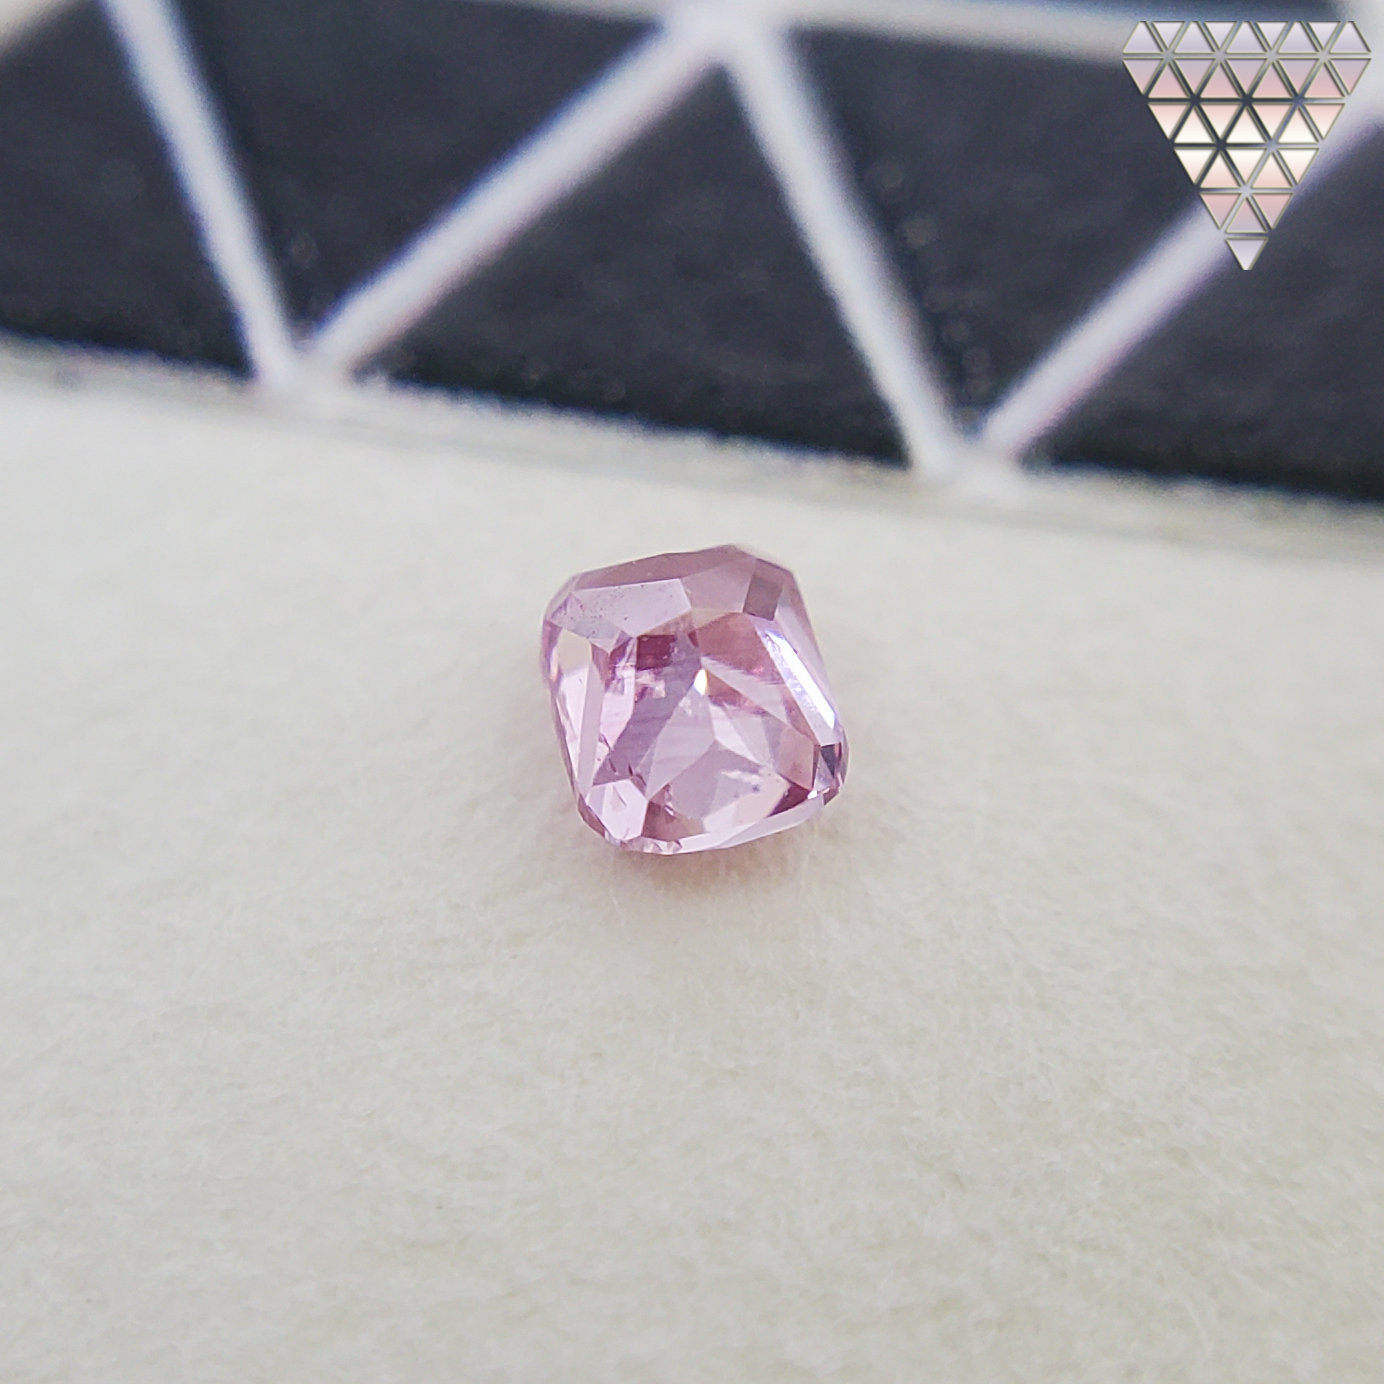 0.08 Carat, Fancy Vivid Purple Pink Natural Diamond, Radiant Shape, SI1 ± Clarity, GIA 4